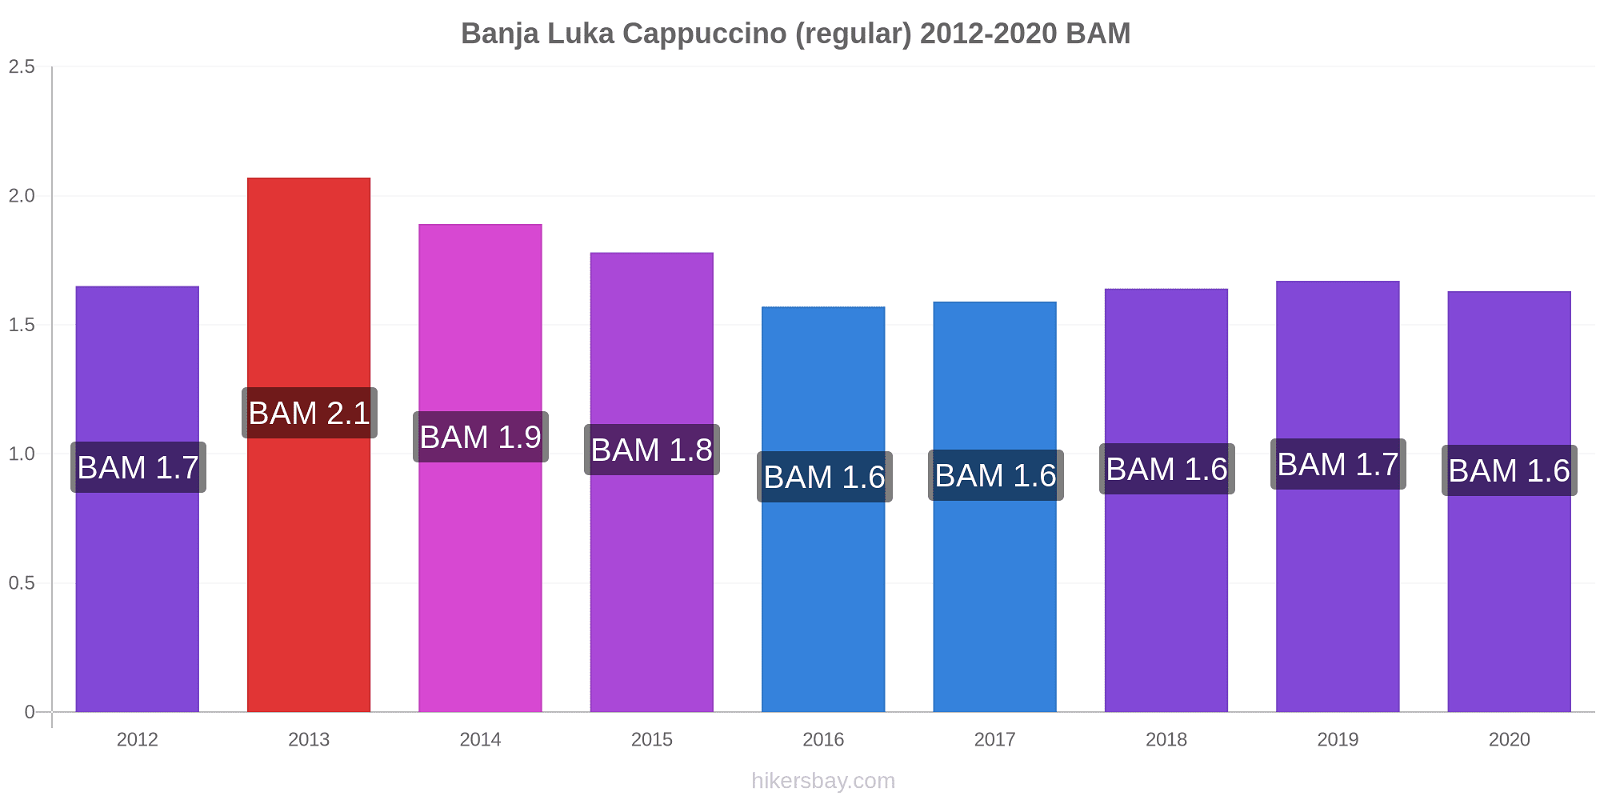 Banja Luka price changes Cappuccino (regular) hikersbay.com